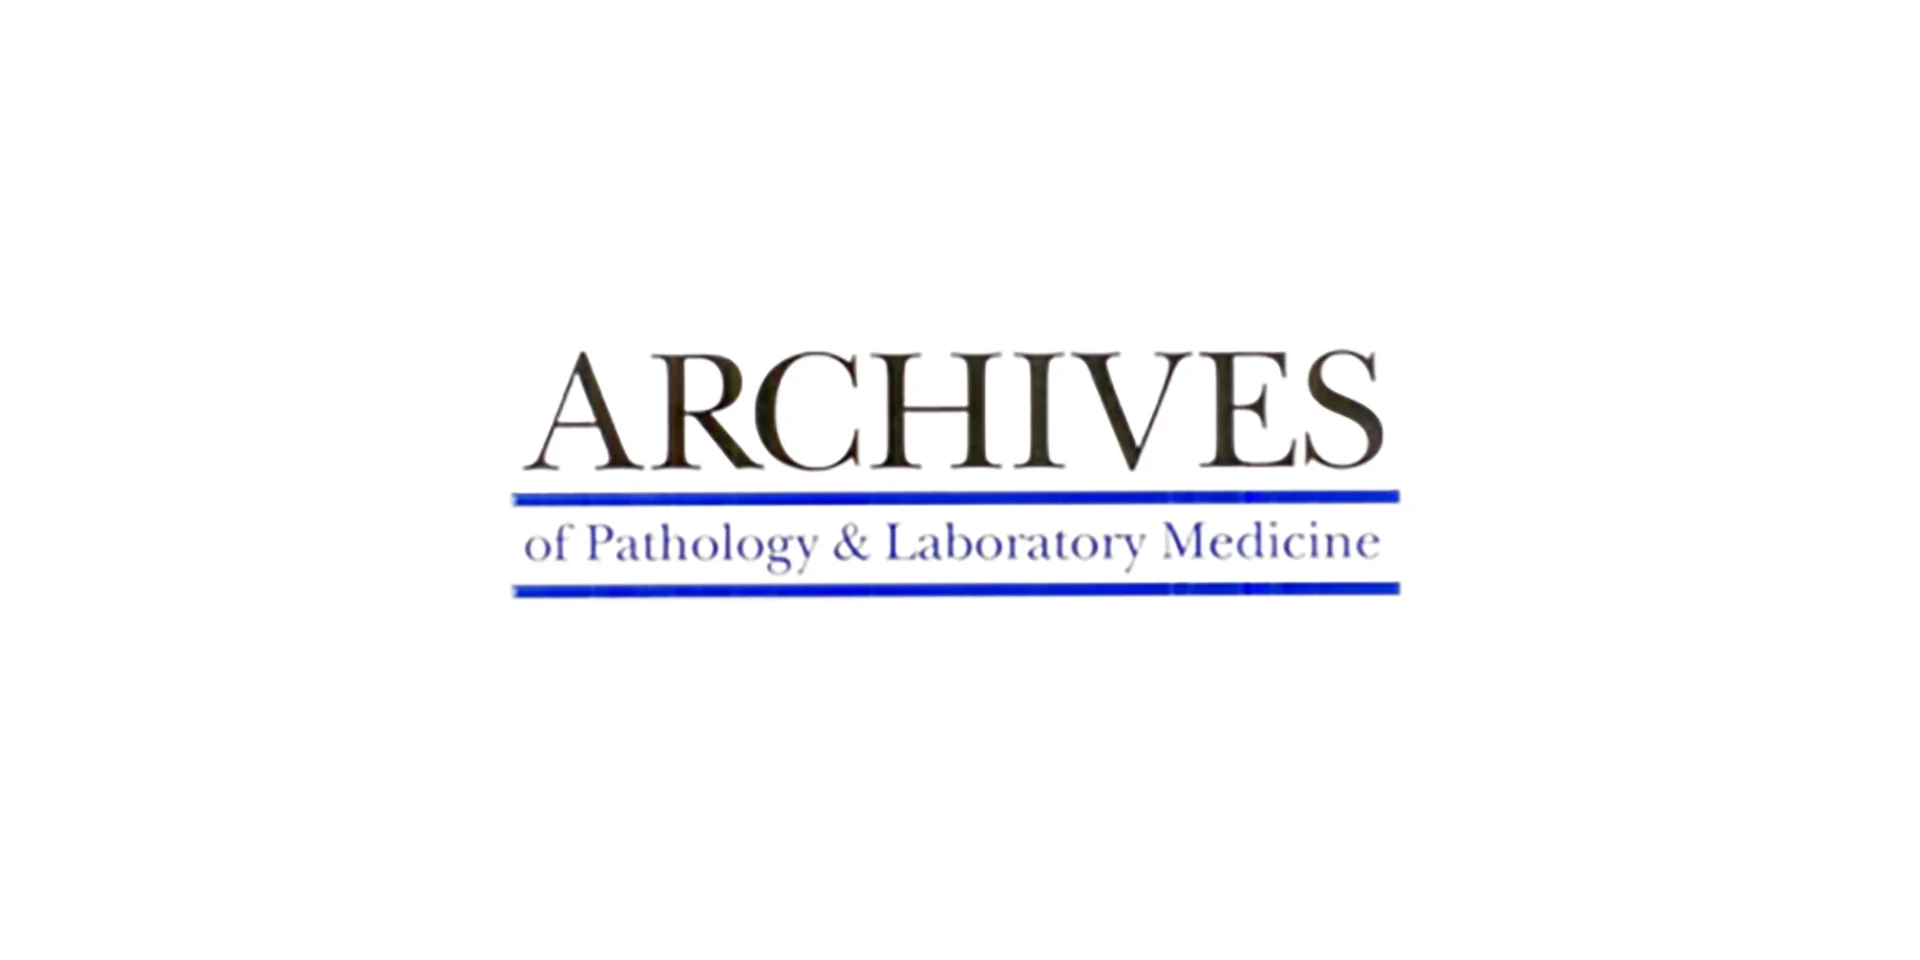 Archives of Pathology & Laboratory Medicine 